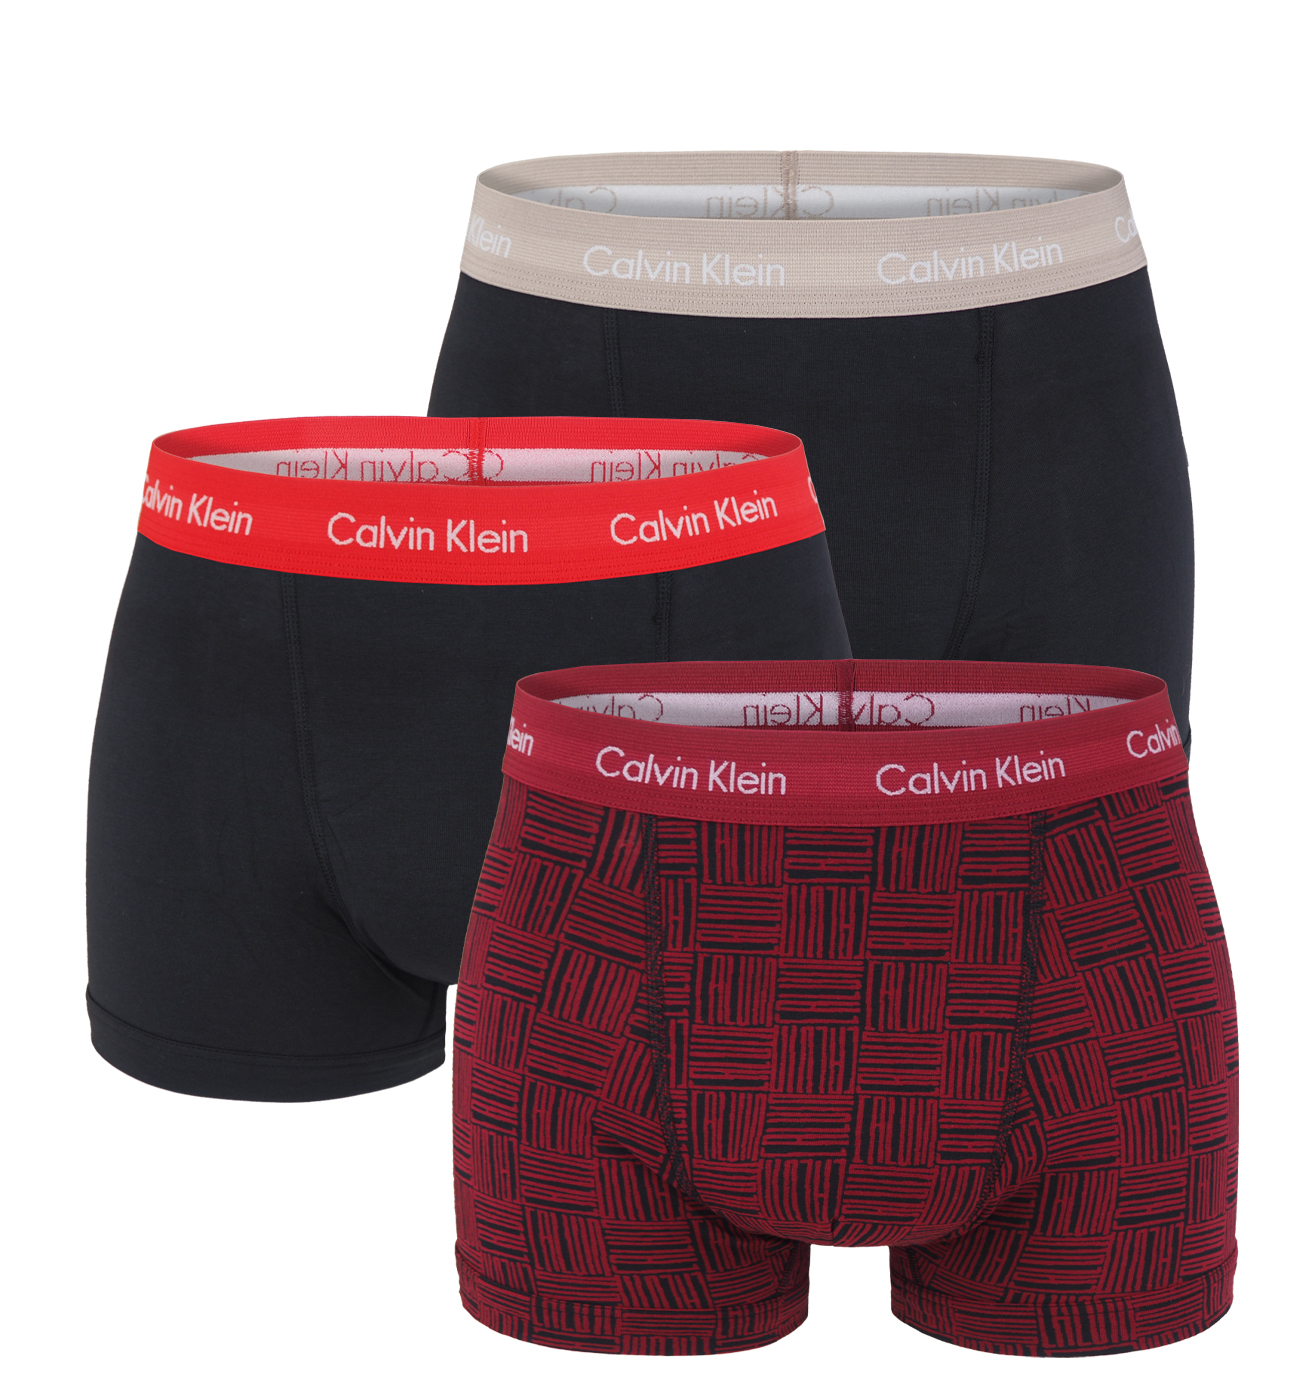 CALVIN KLEIN - boxerky 3PACK cotton stretch classic CALVIN black logo - limitovaná edícia-XL (101-106 cm)